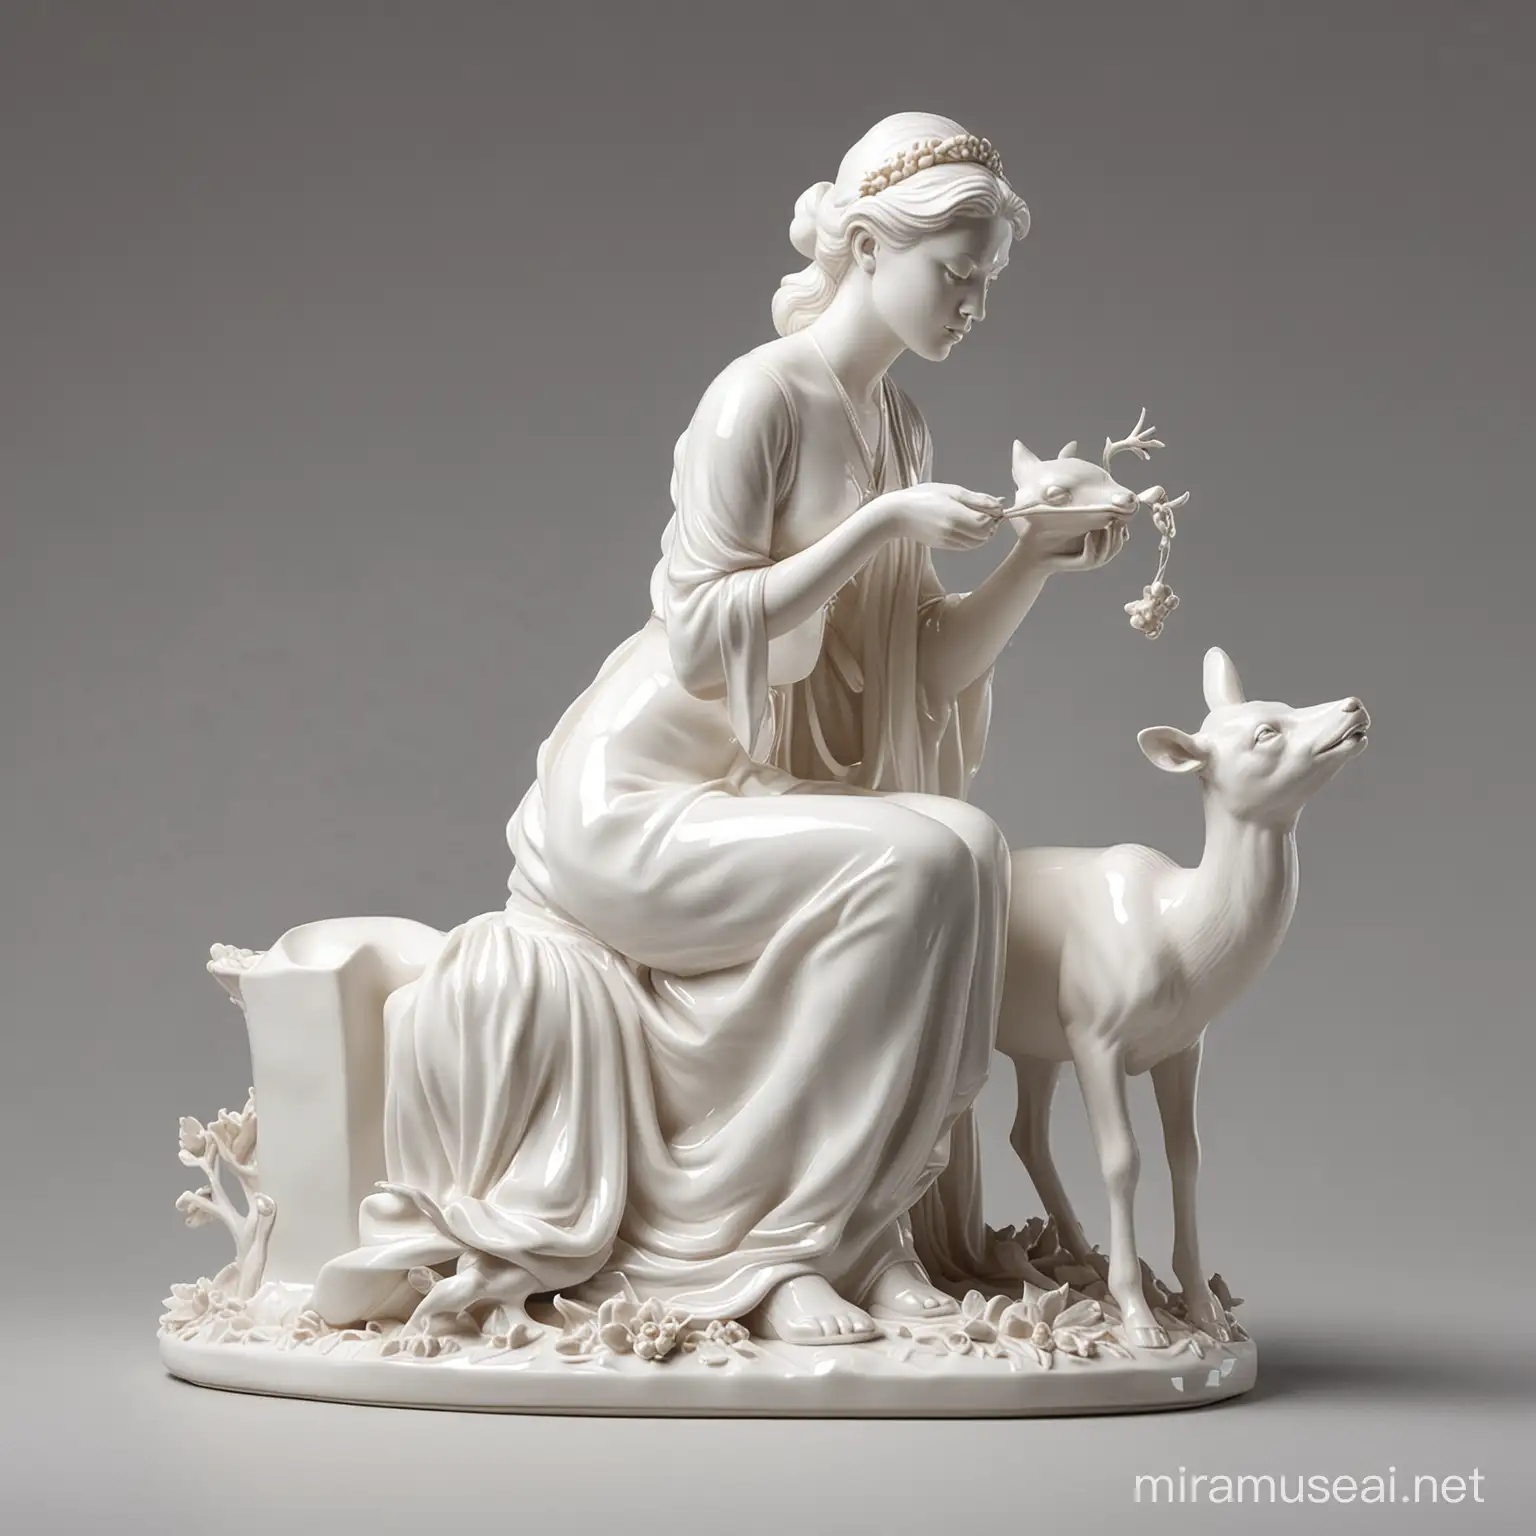 Elegant Porcelain Figurine of Woman and Deer in Serene Forest Setting